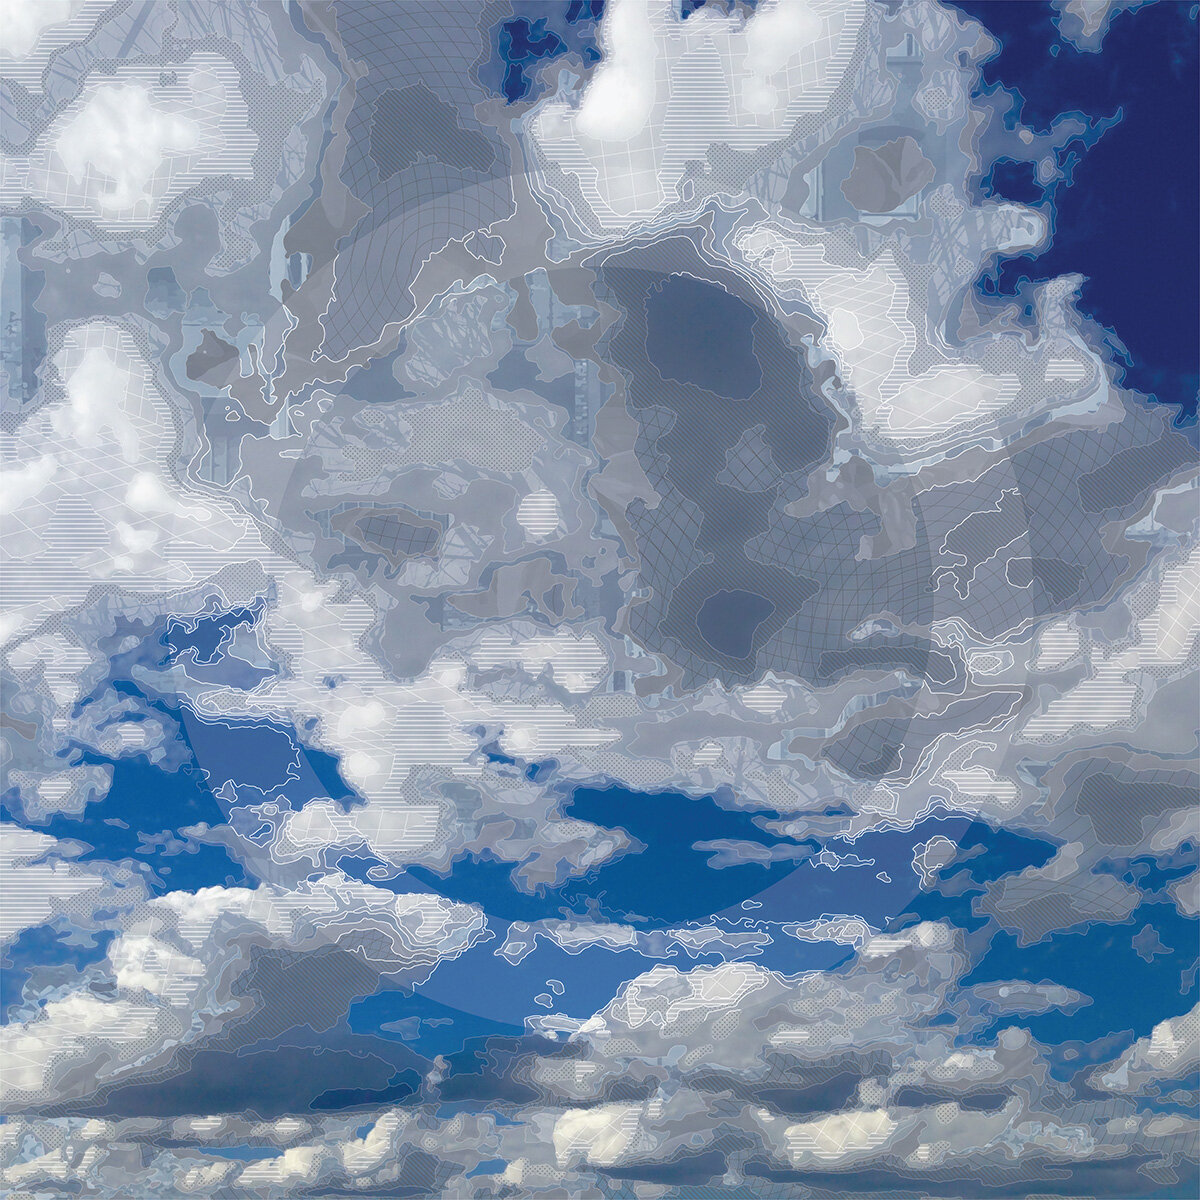 CloudPatterns4-1200.jpg